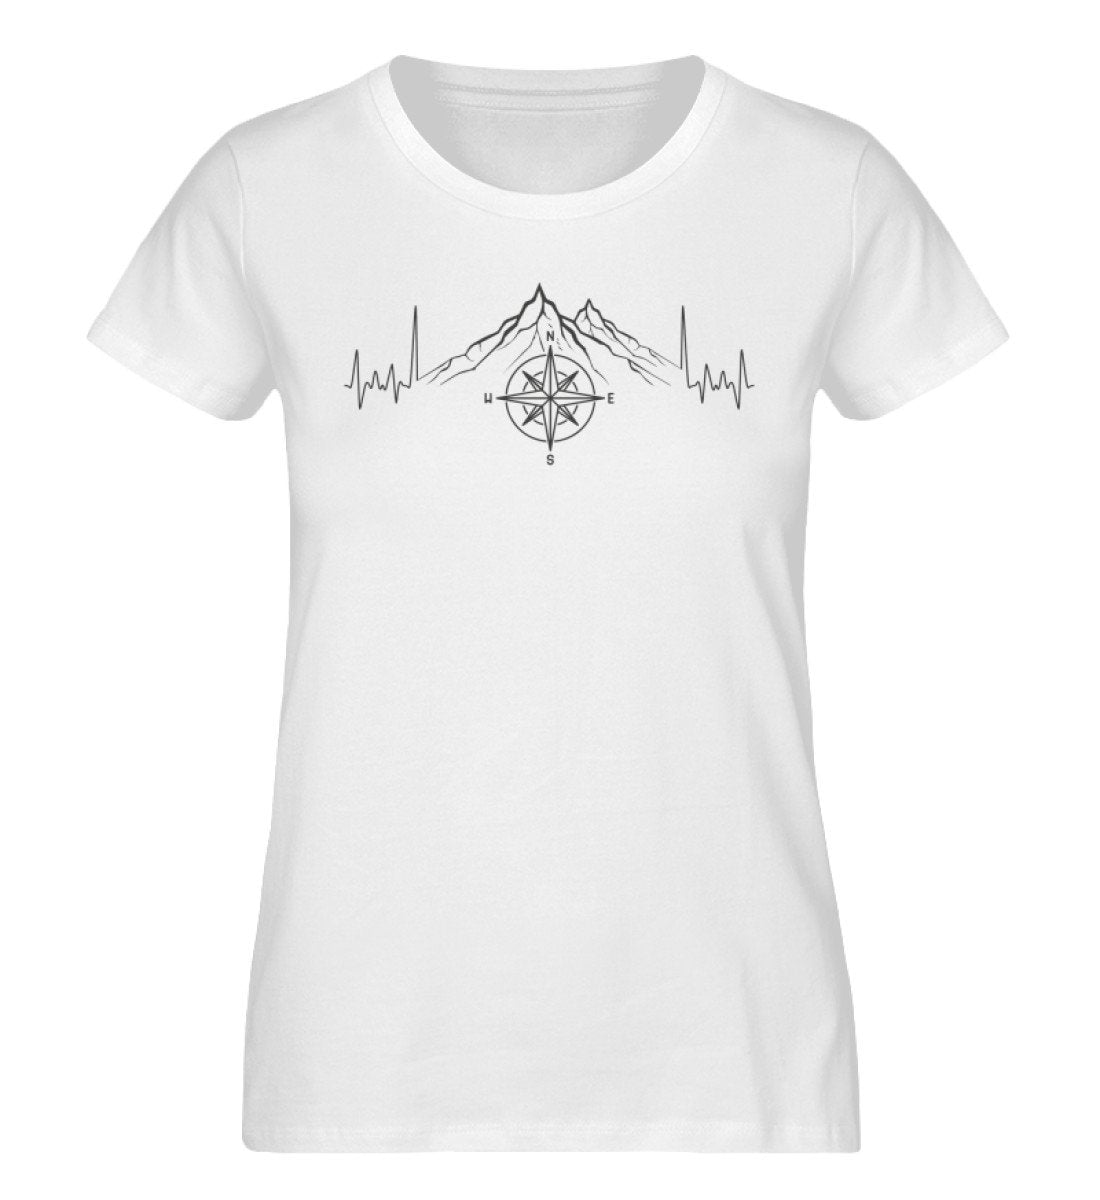 Herzschlag Berge und Kompass - Damen Organic T-Shirt' berge camping klettern wandern Weiß